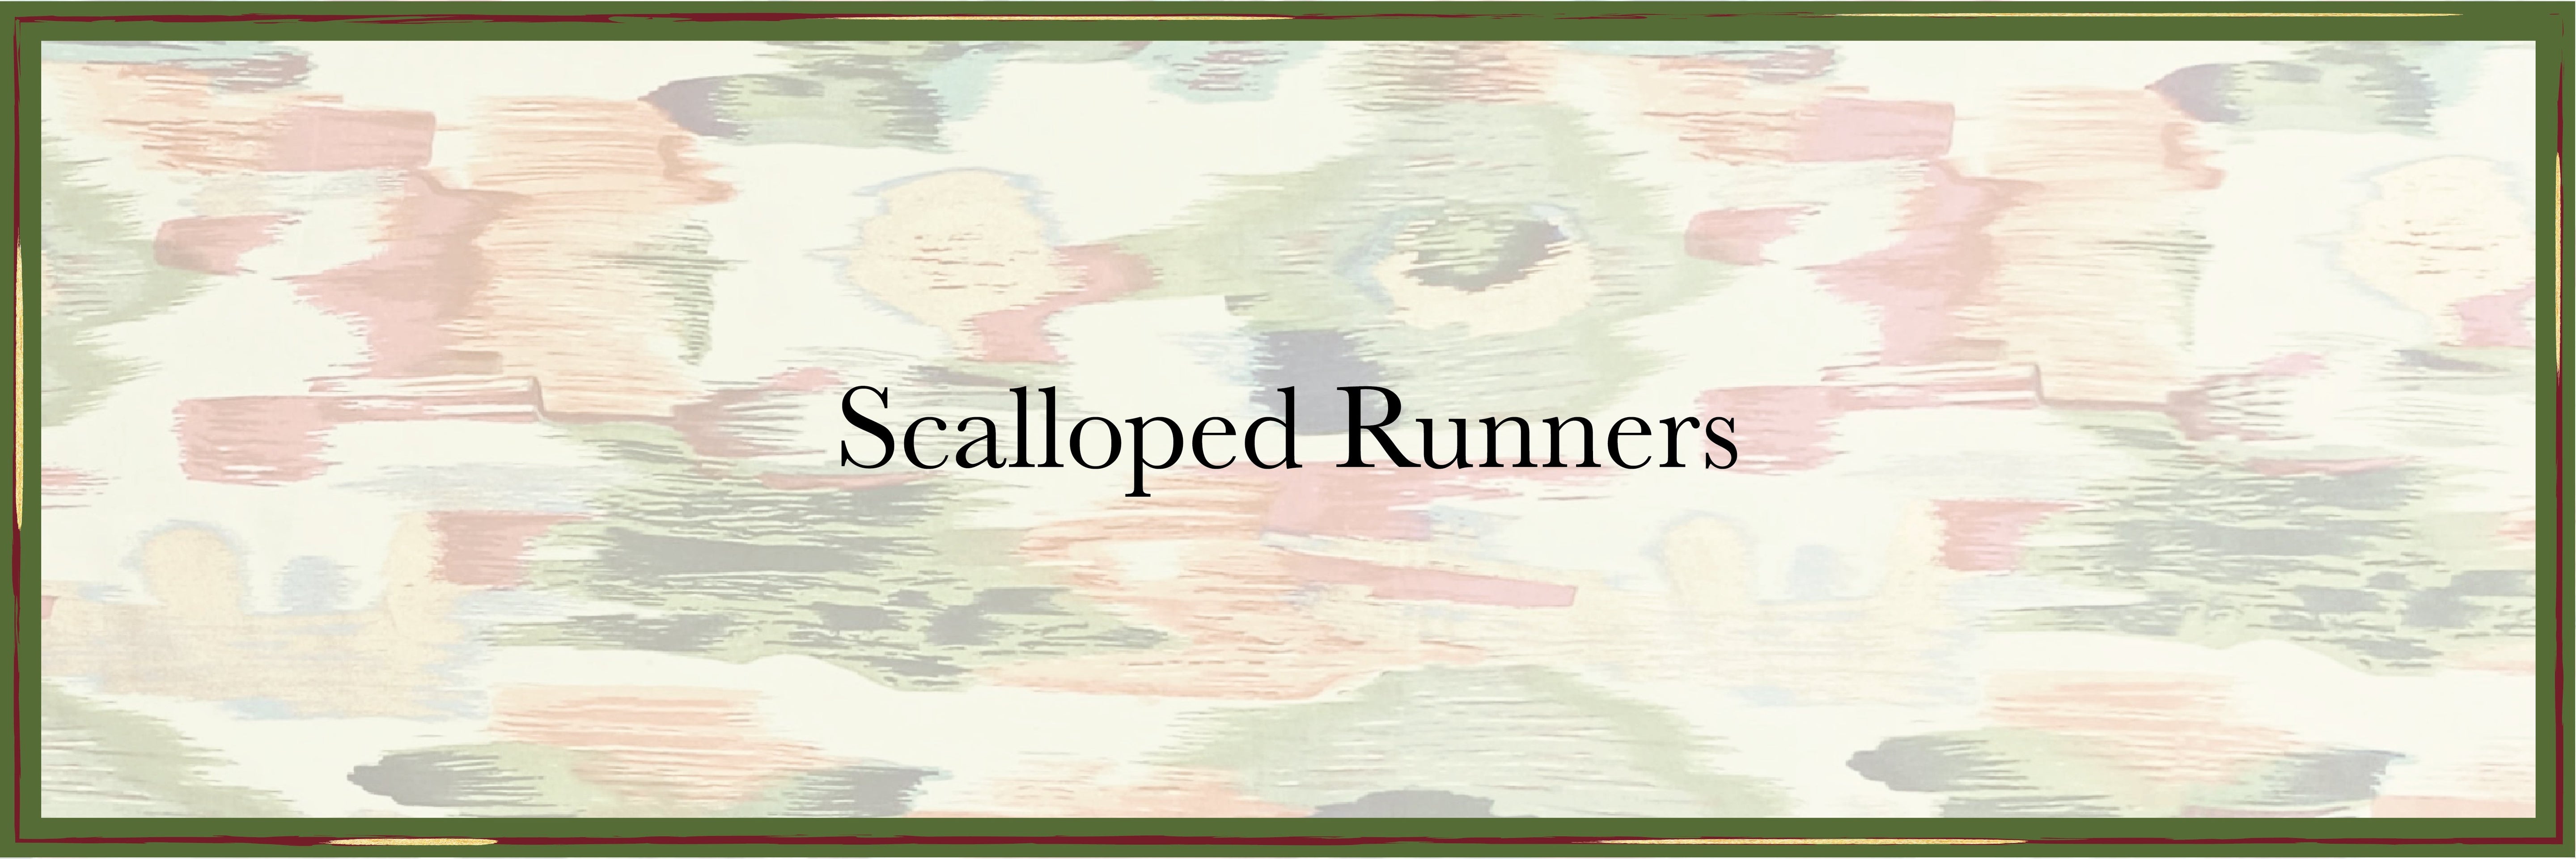 Scalloped Runners